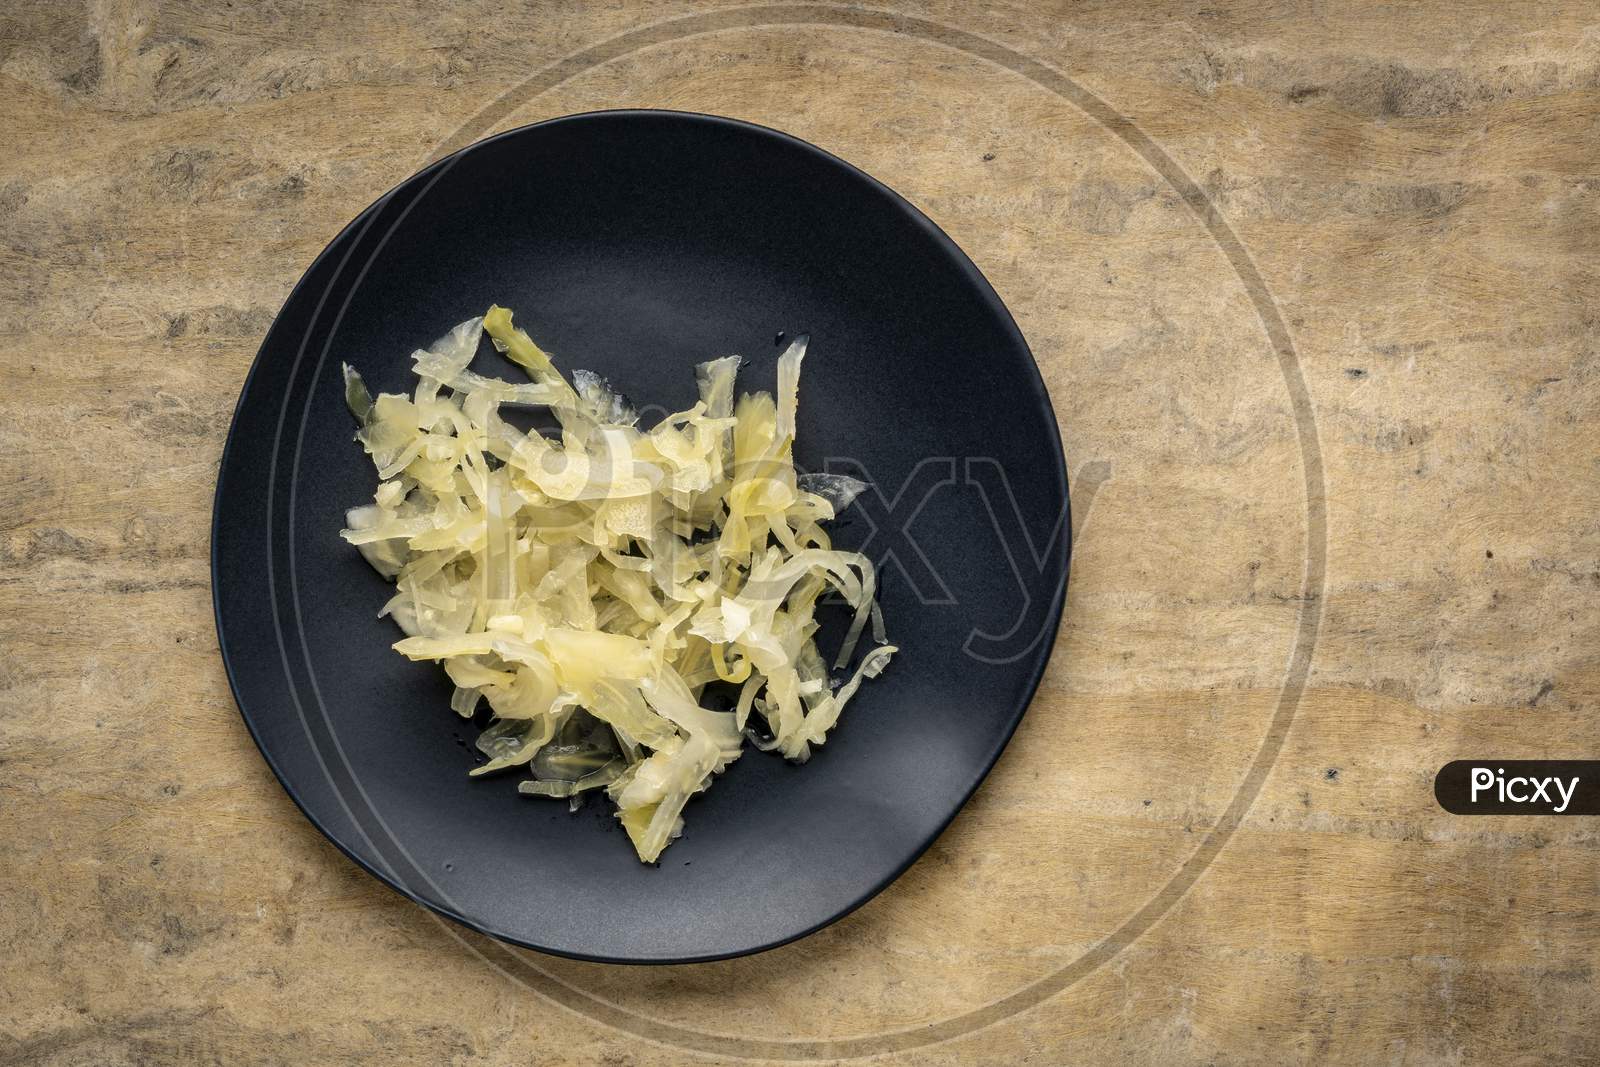 Black Plate Of Sauerkraut Against  Bark Textured Paper Background, Probiotics Concept - Fermented Food Good For Gut Health